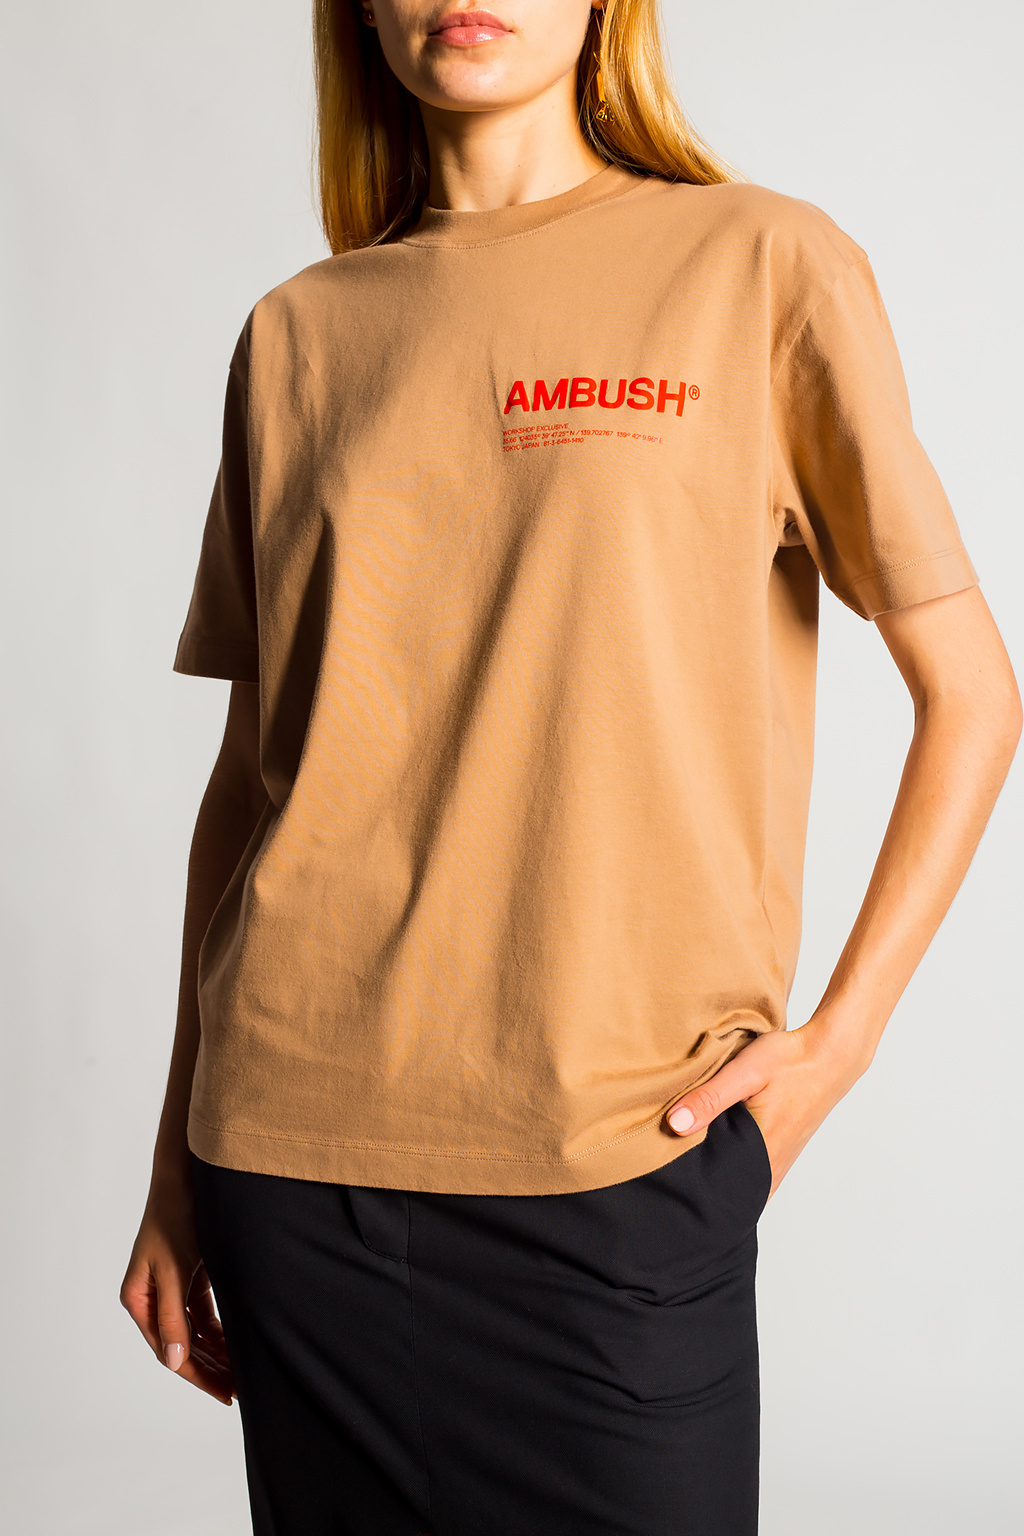 Ambush James Perse faded long-sleeve shirt